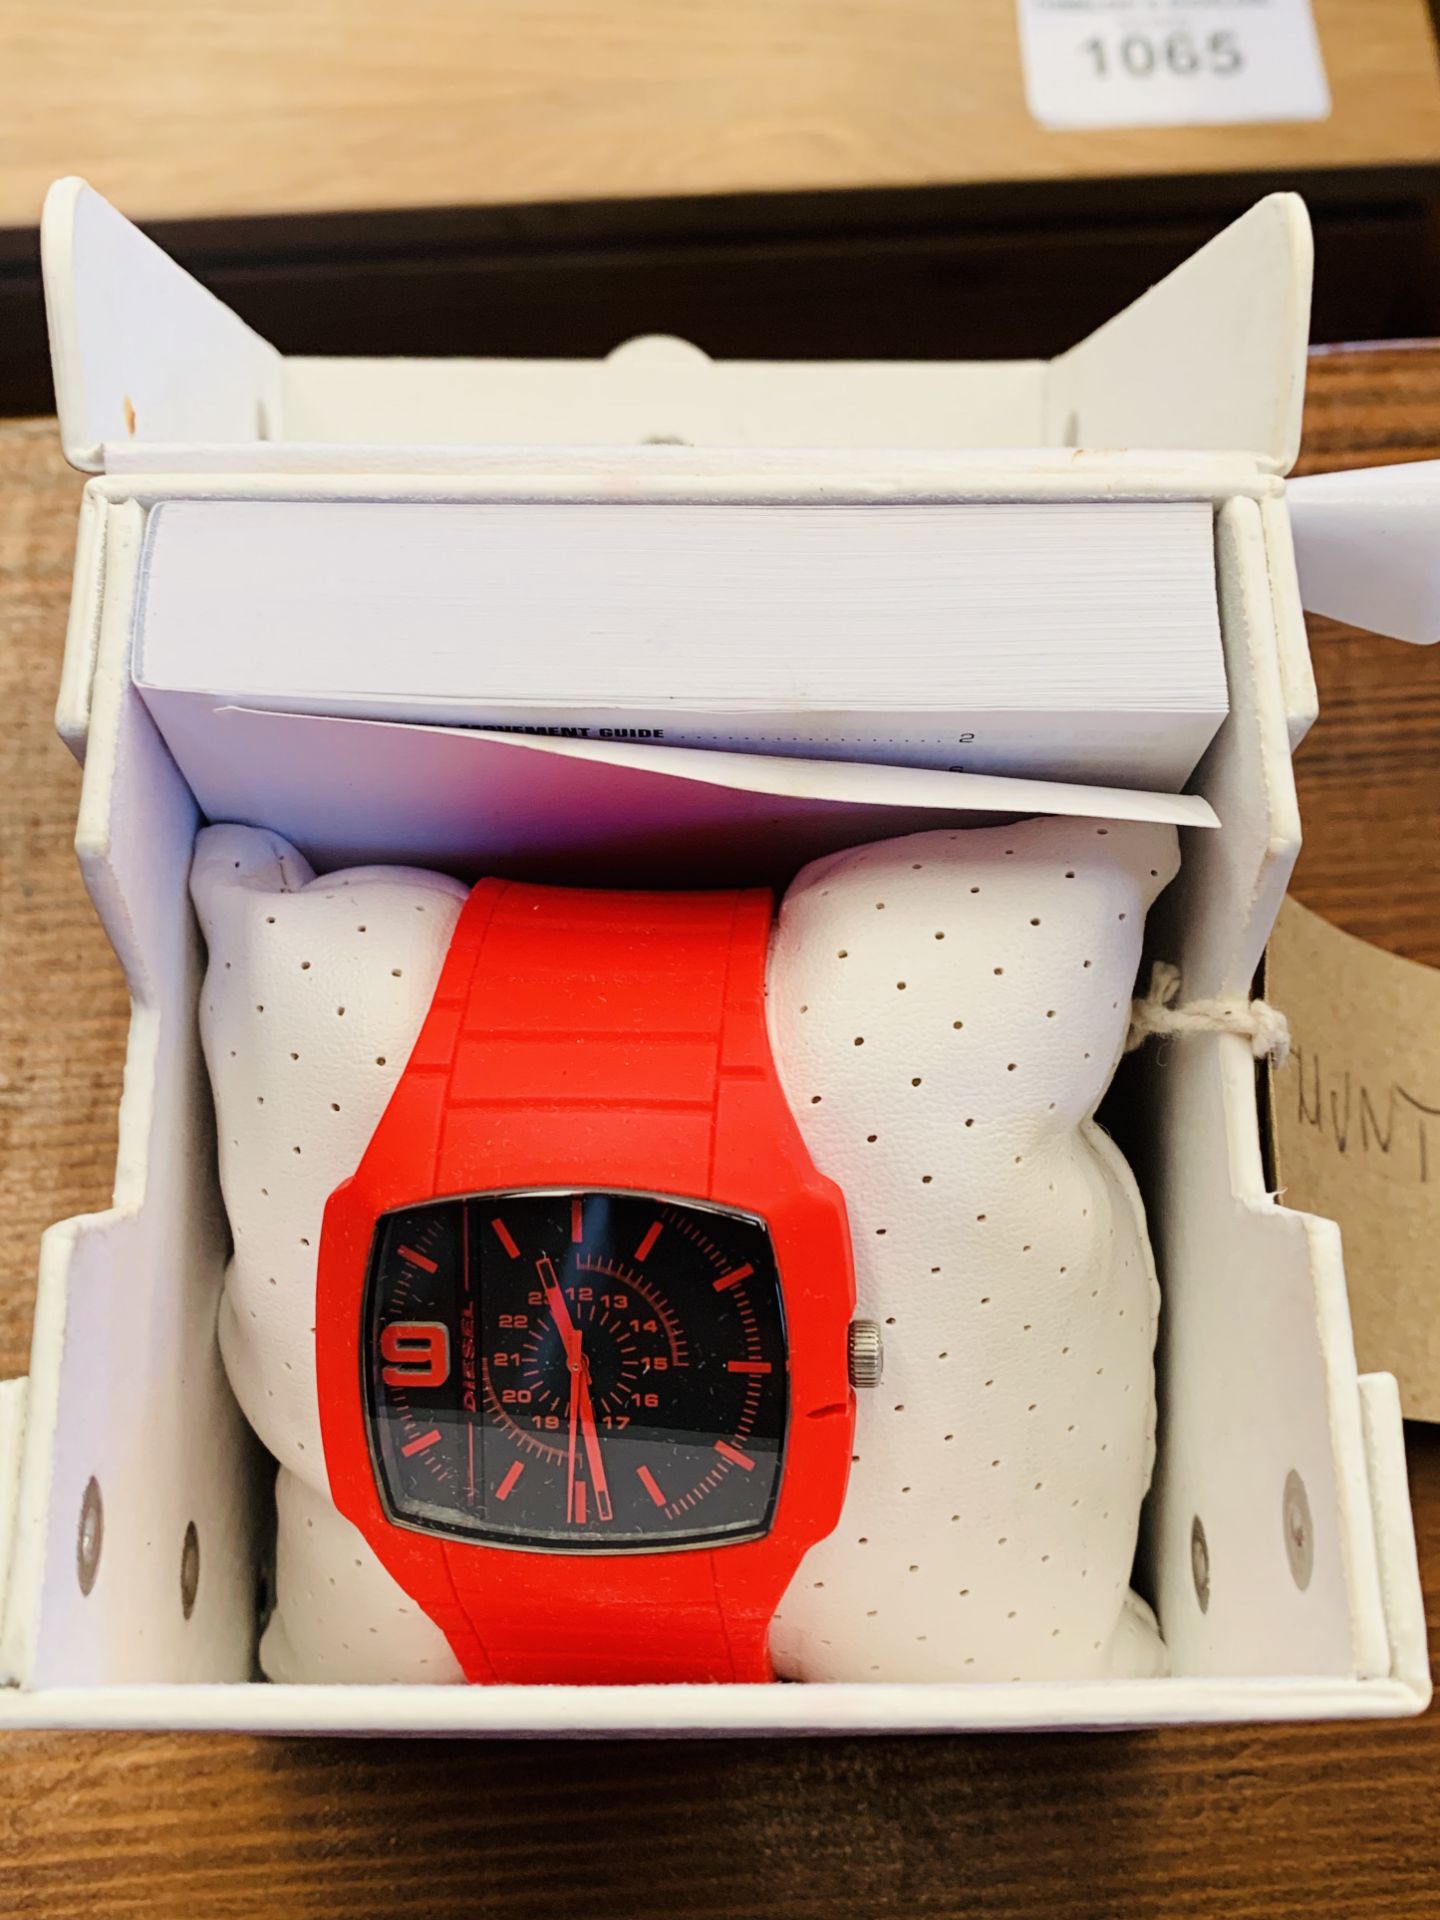 Diesel fashion wrist watch, new, boxed.